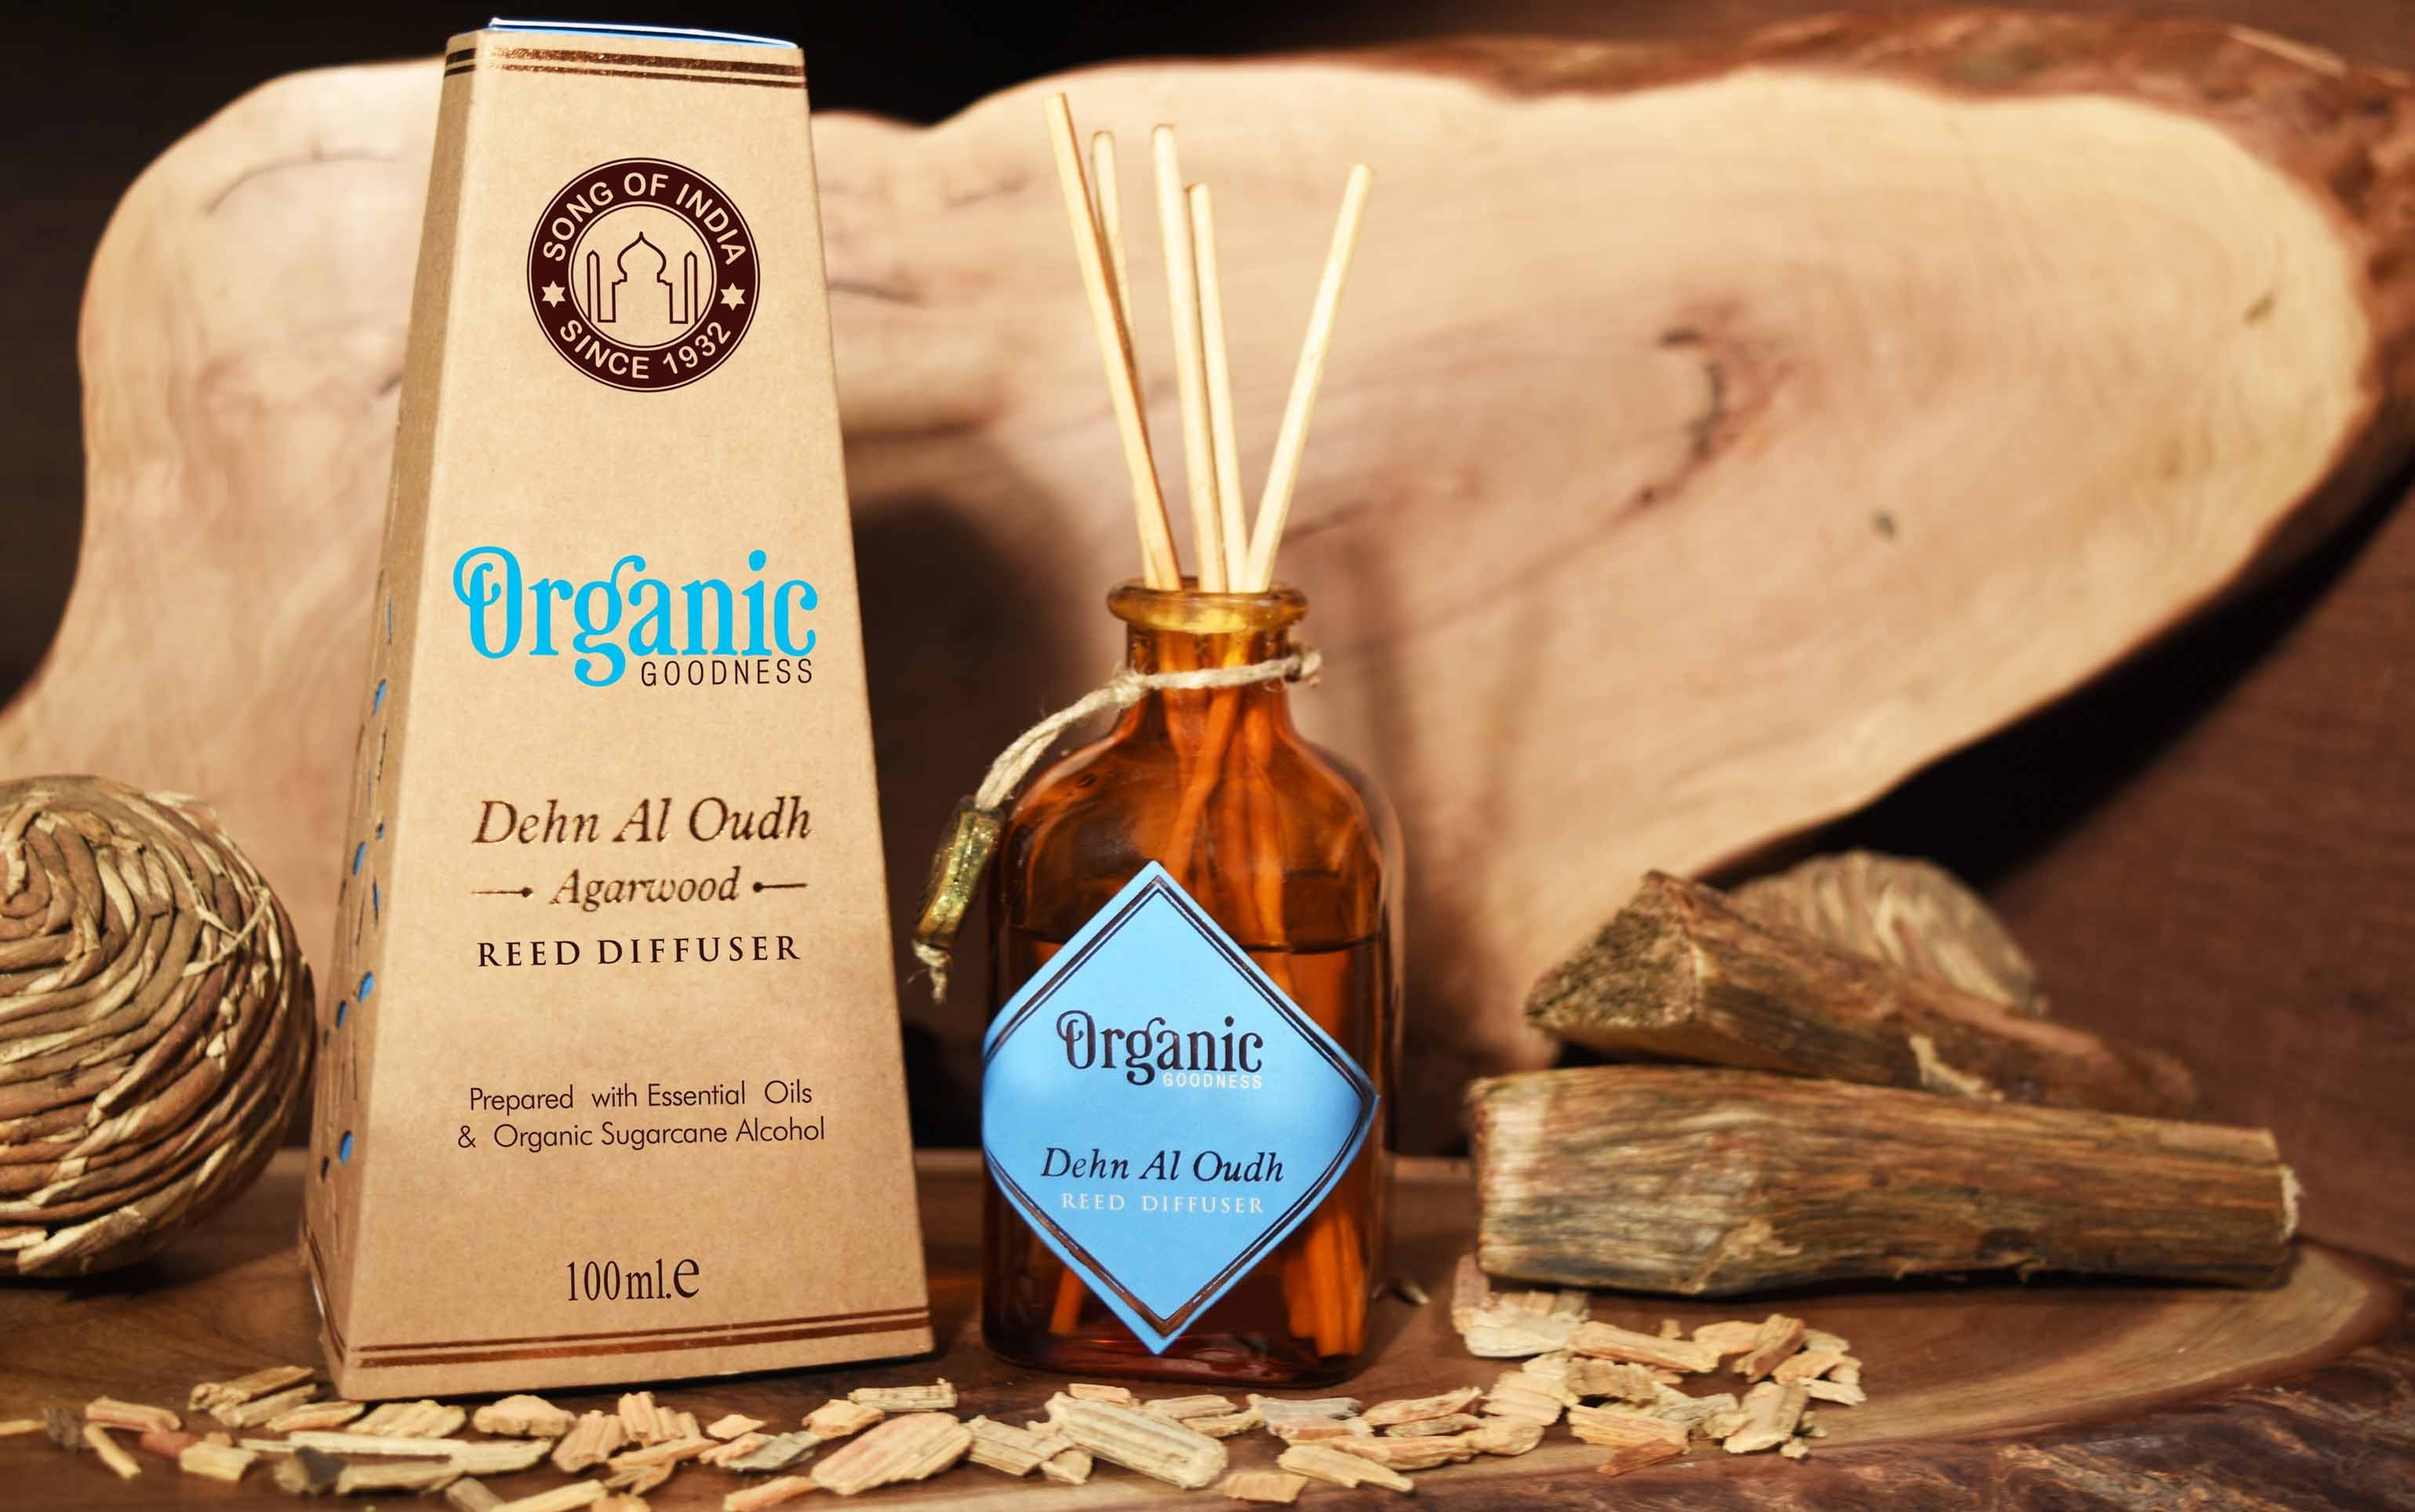 Organic Goodness Reed Diffuser - Patchouli Vanilla